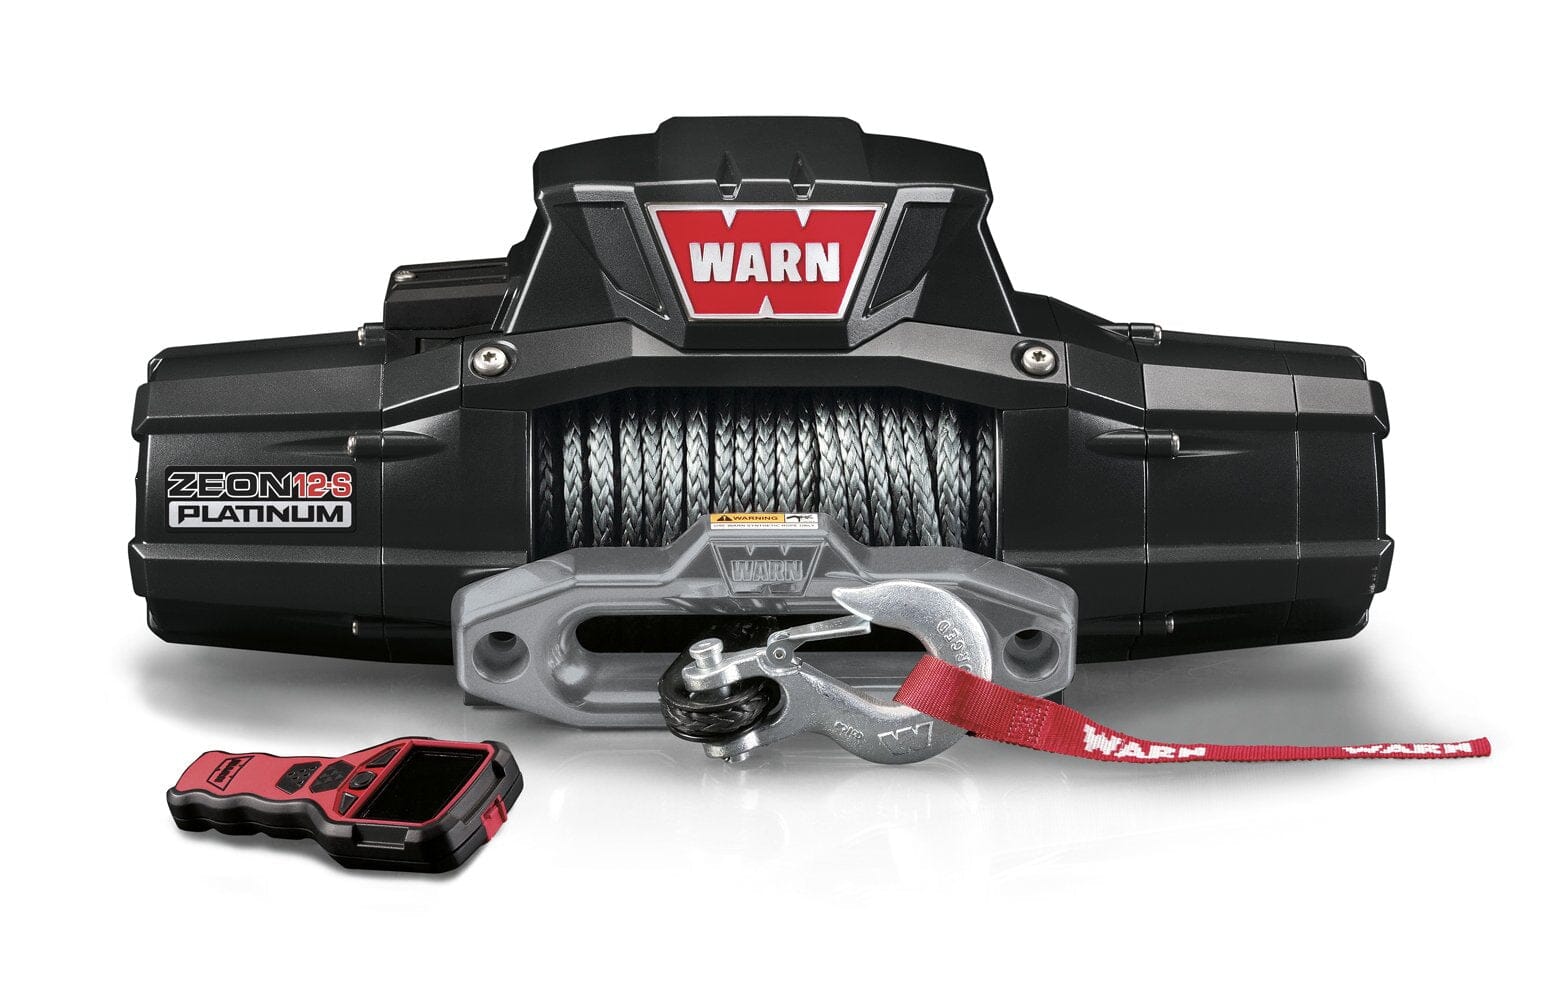 WARN Zeon 12 Winch Recovery Gear Warn Zeon 12-S Platinum 